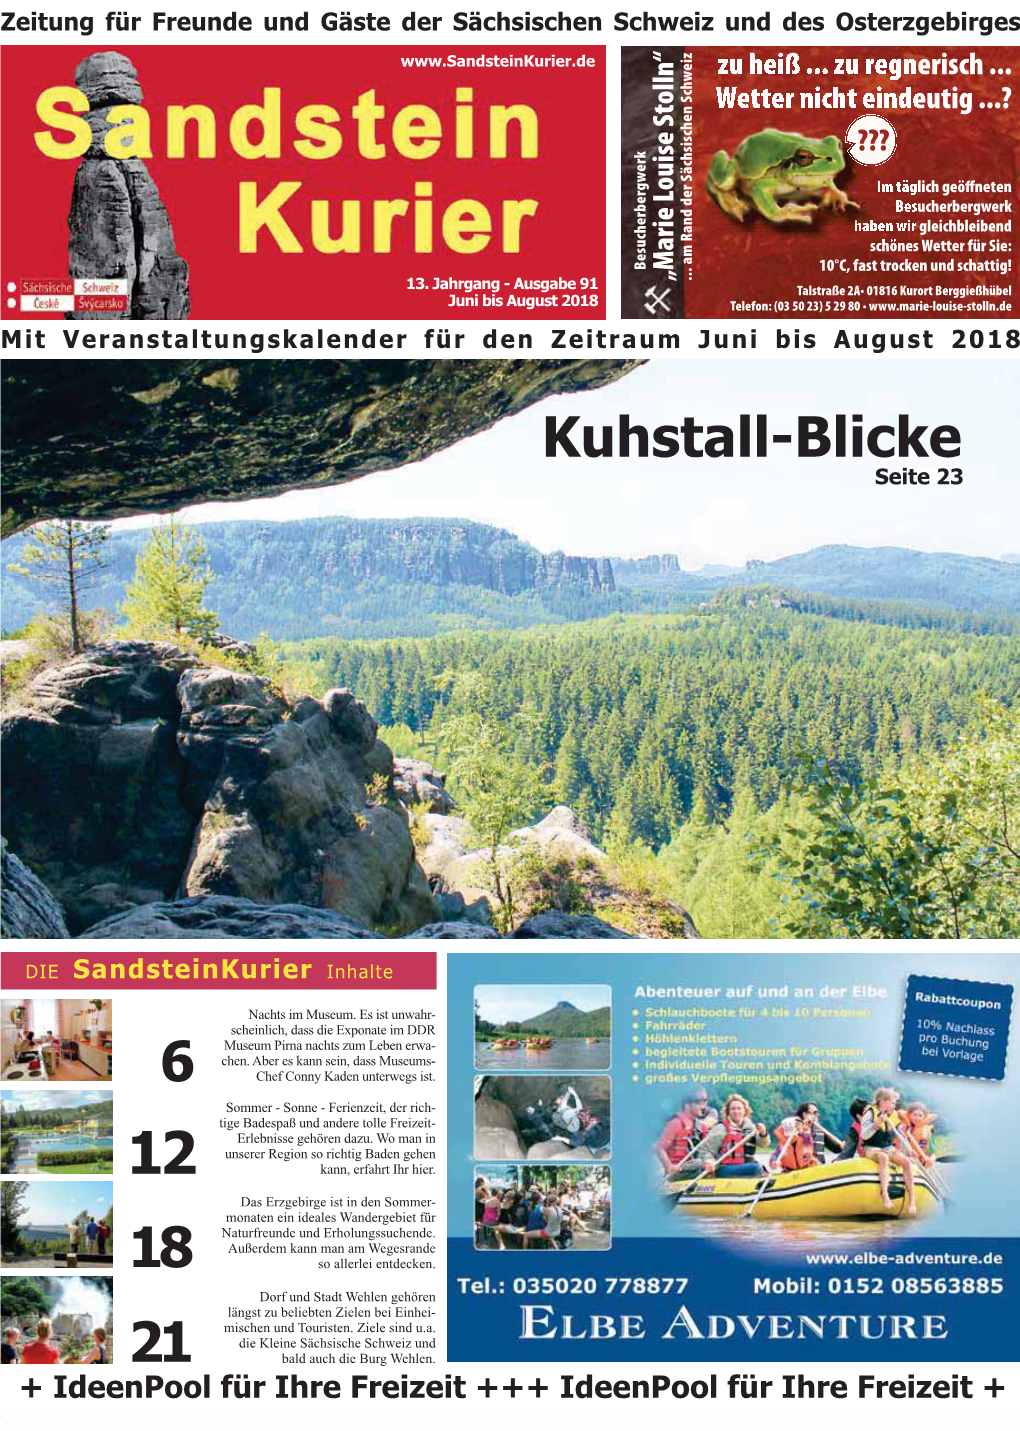 18 6 21 Kuhstall-Blicke